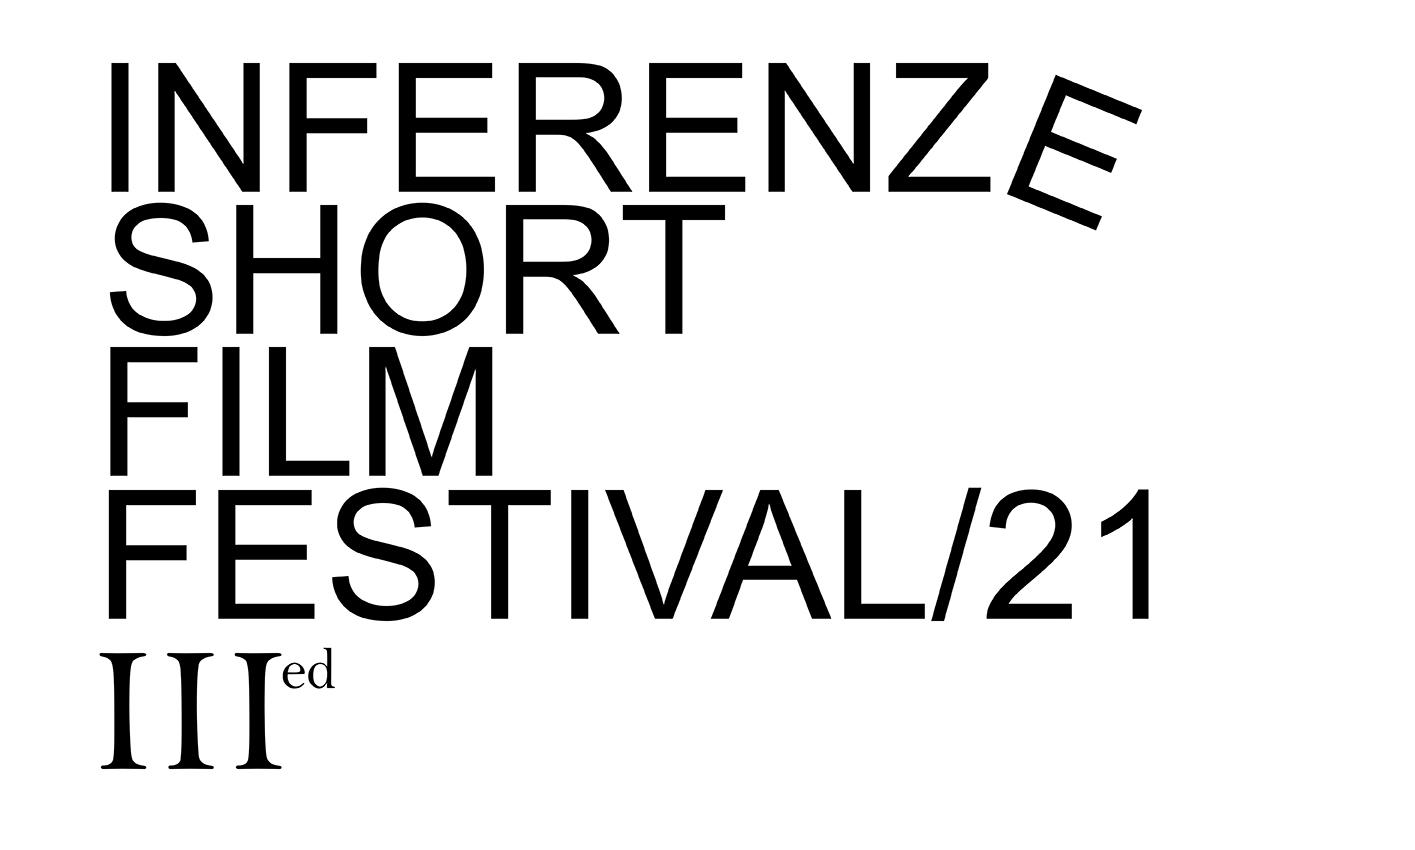 Inferenze short film festival finalisti